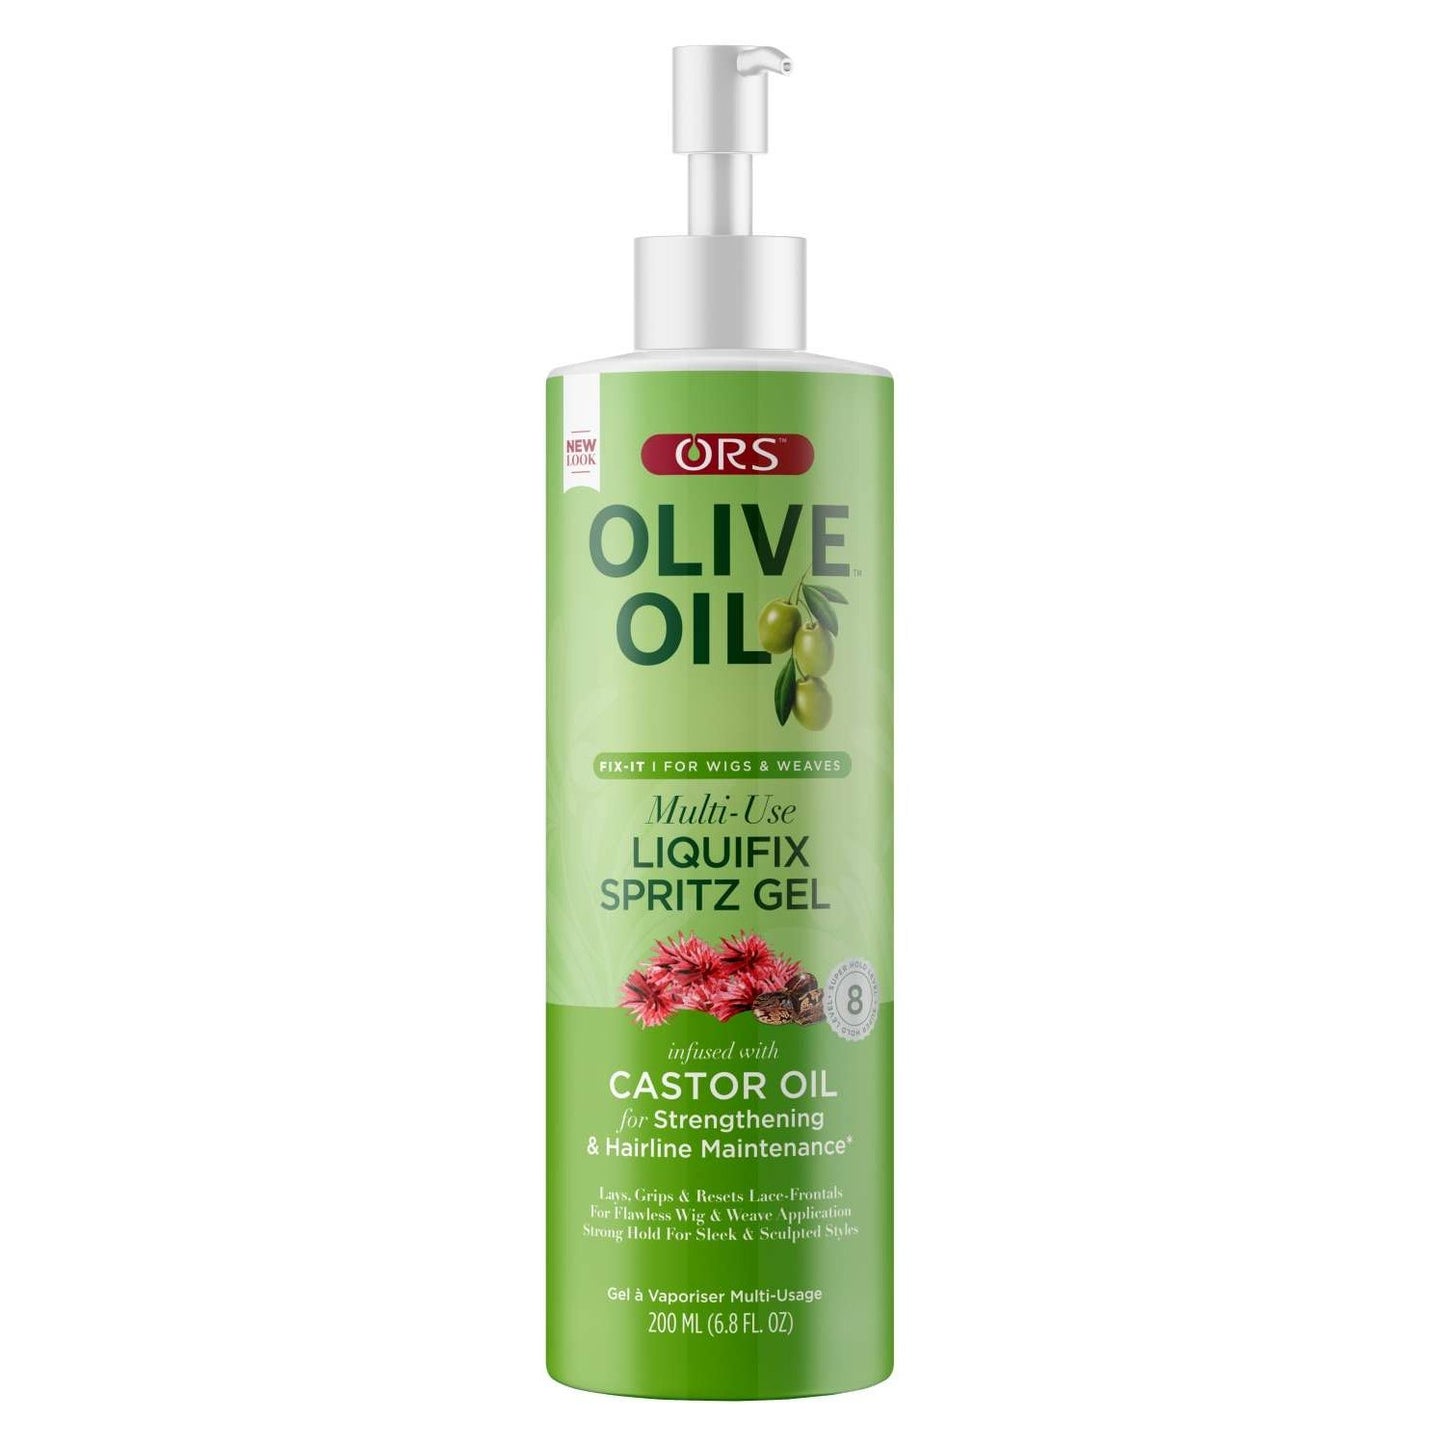 Ors aceite de oliva Fix-It para pelucas tejidos gel Liquifix Spritz multiusos 6.8 oz